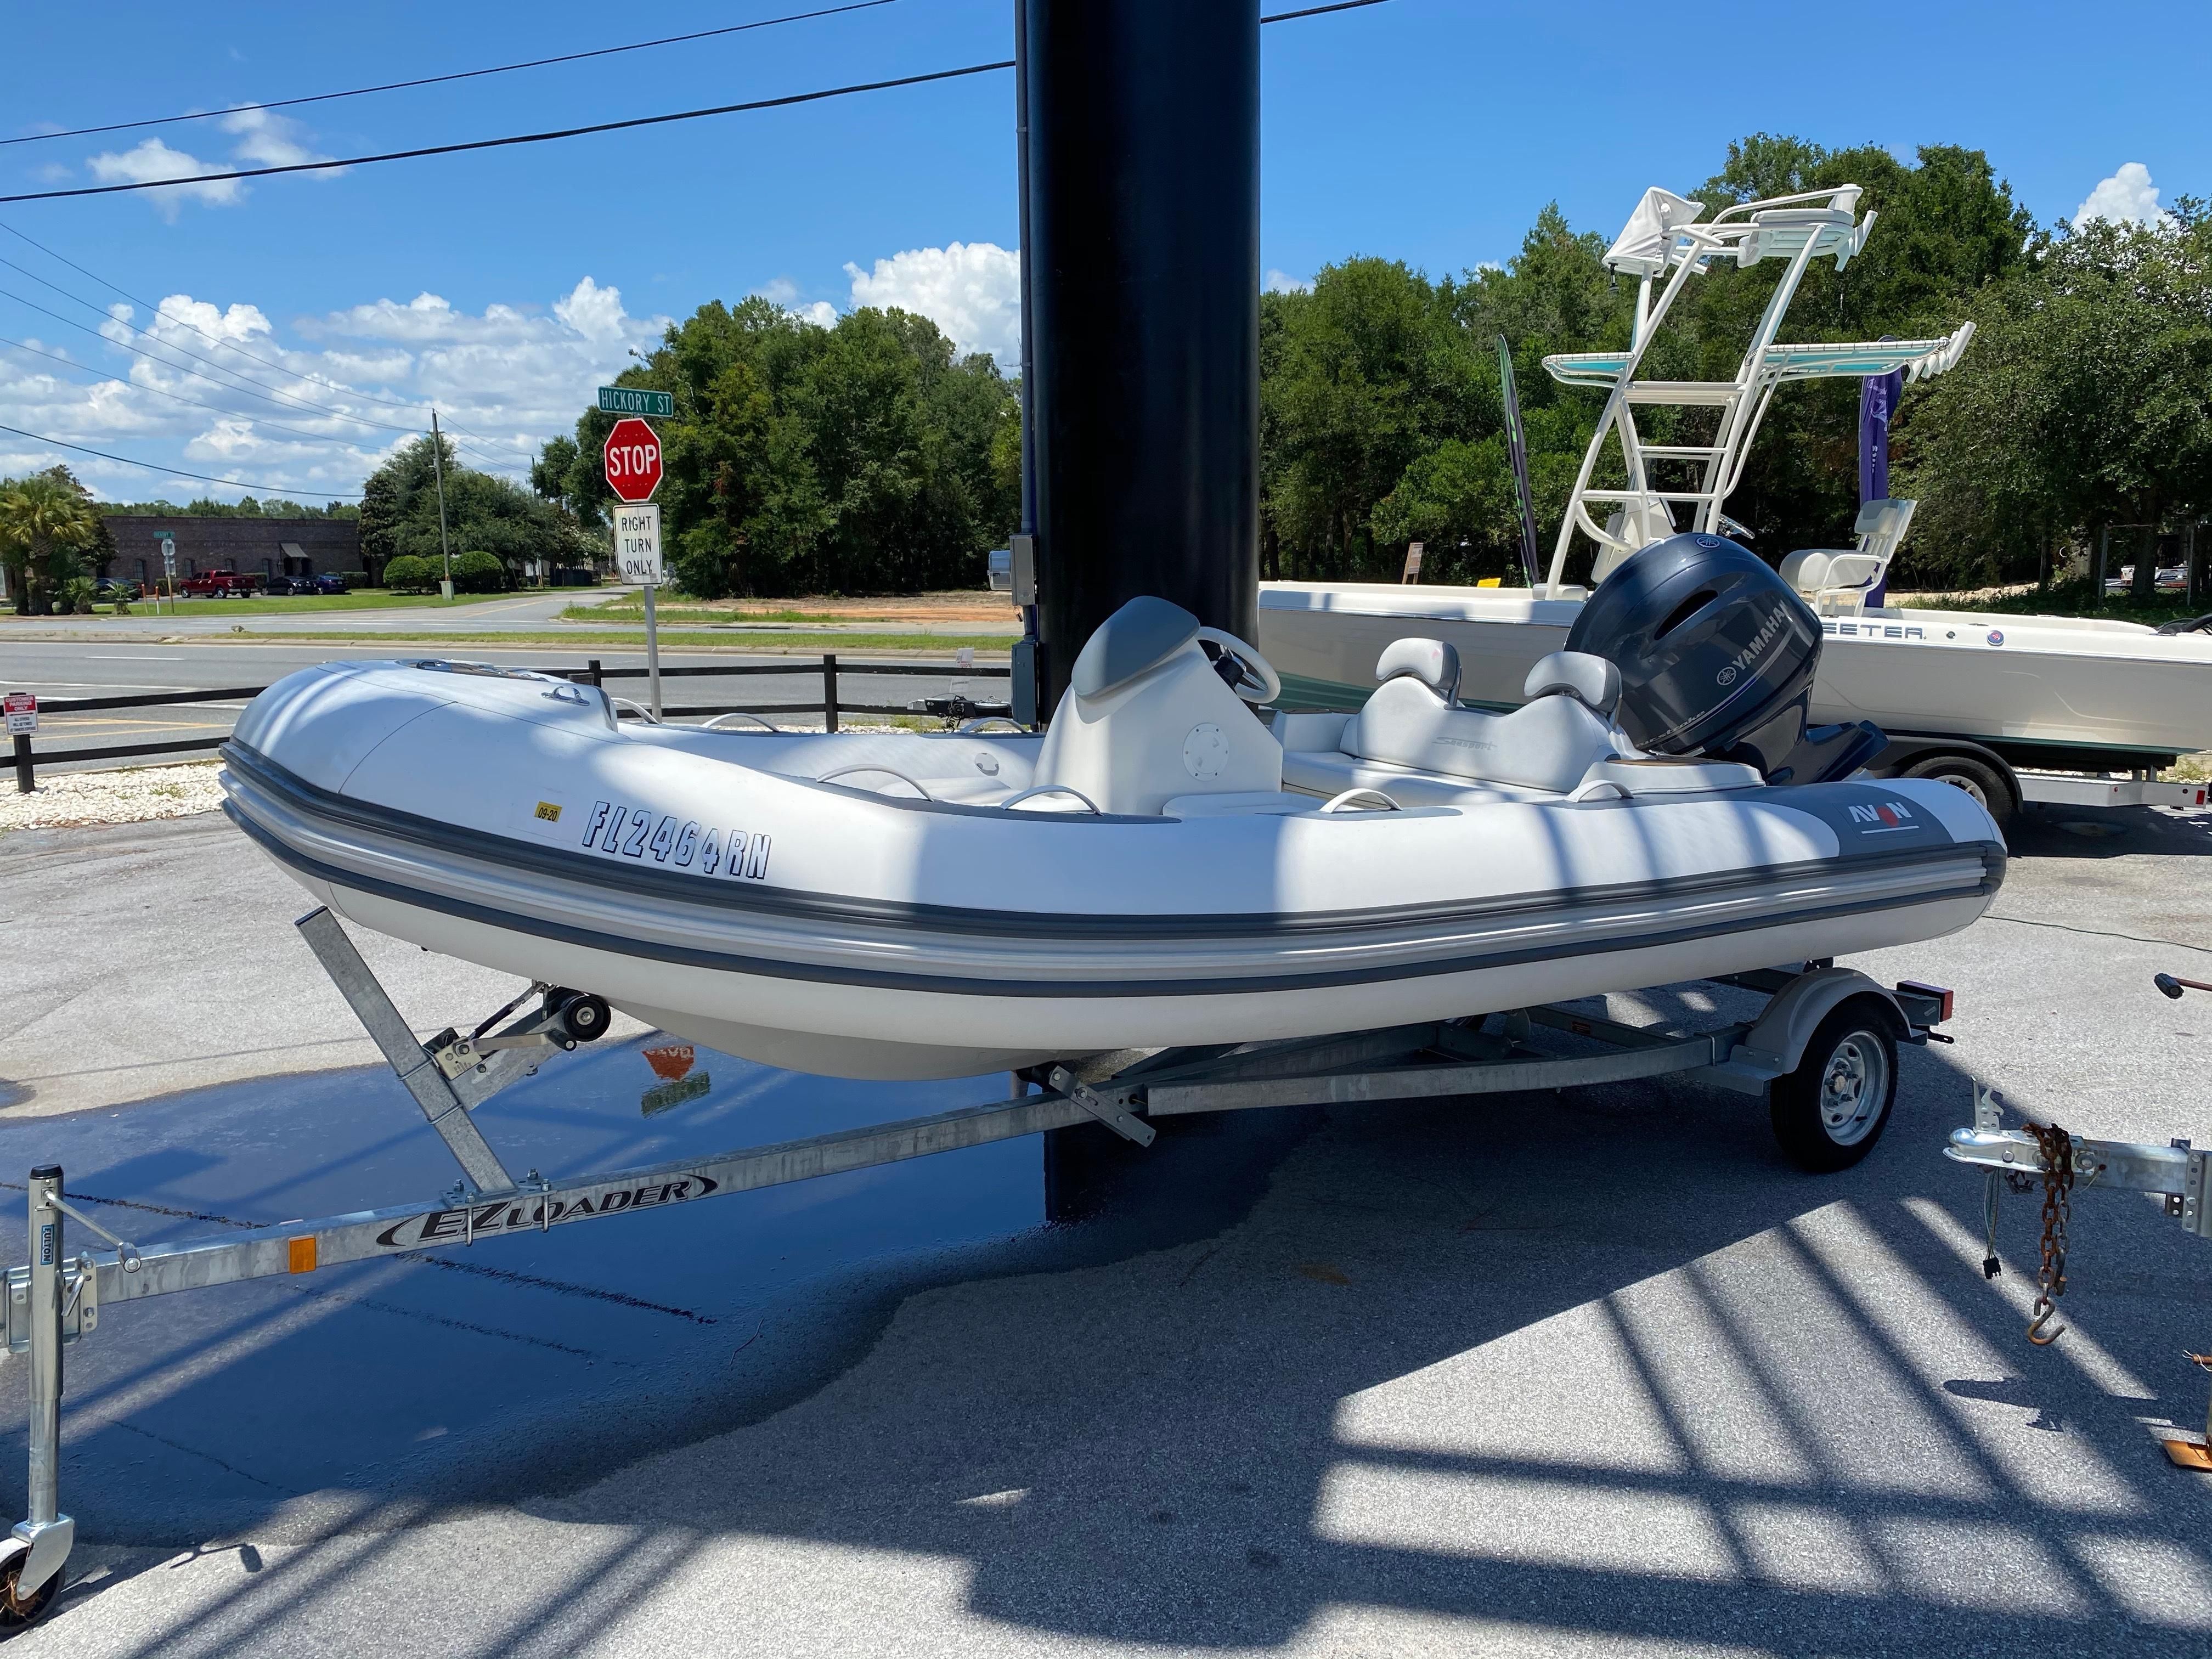 2018 Avon Sea Sport 490 DL Rigid Inflatable Boat (RIB) for